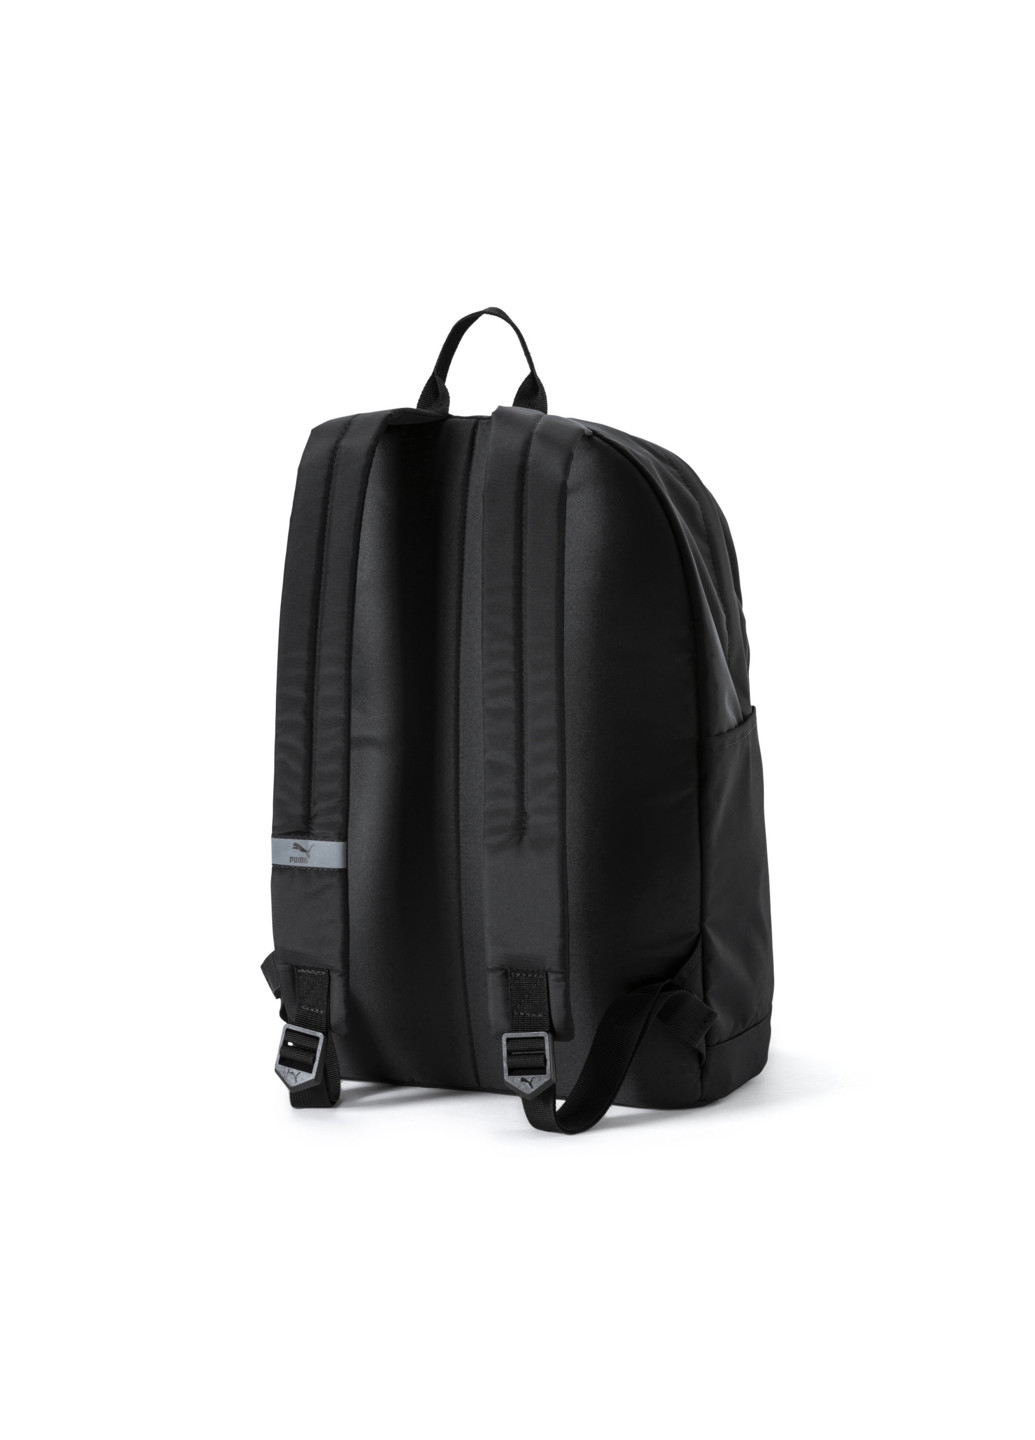 Рюкзак Puma Originals Backpack чёрная спортивная